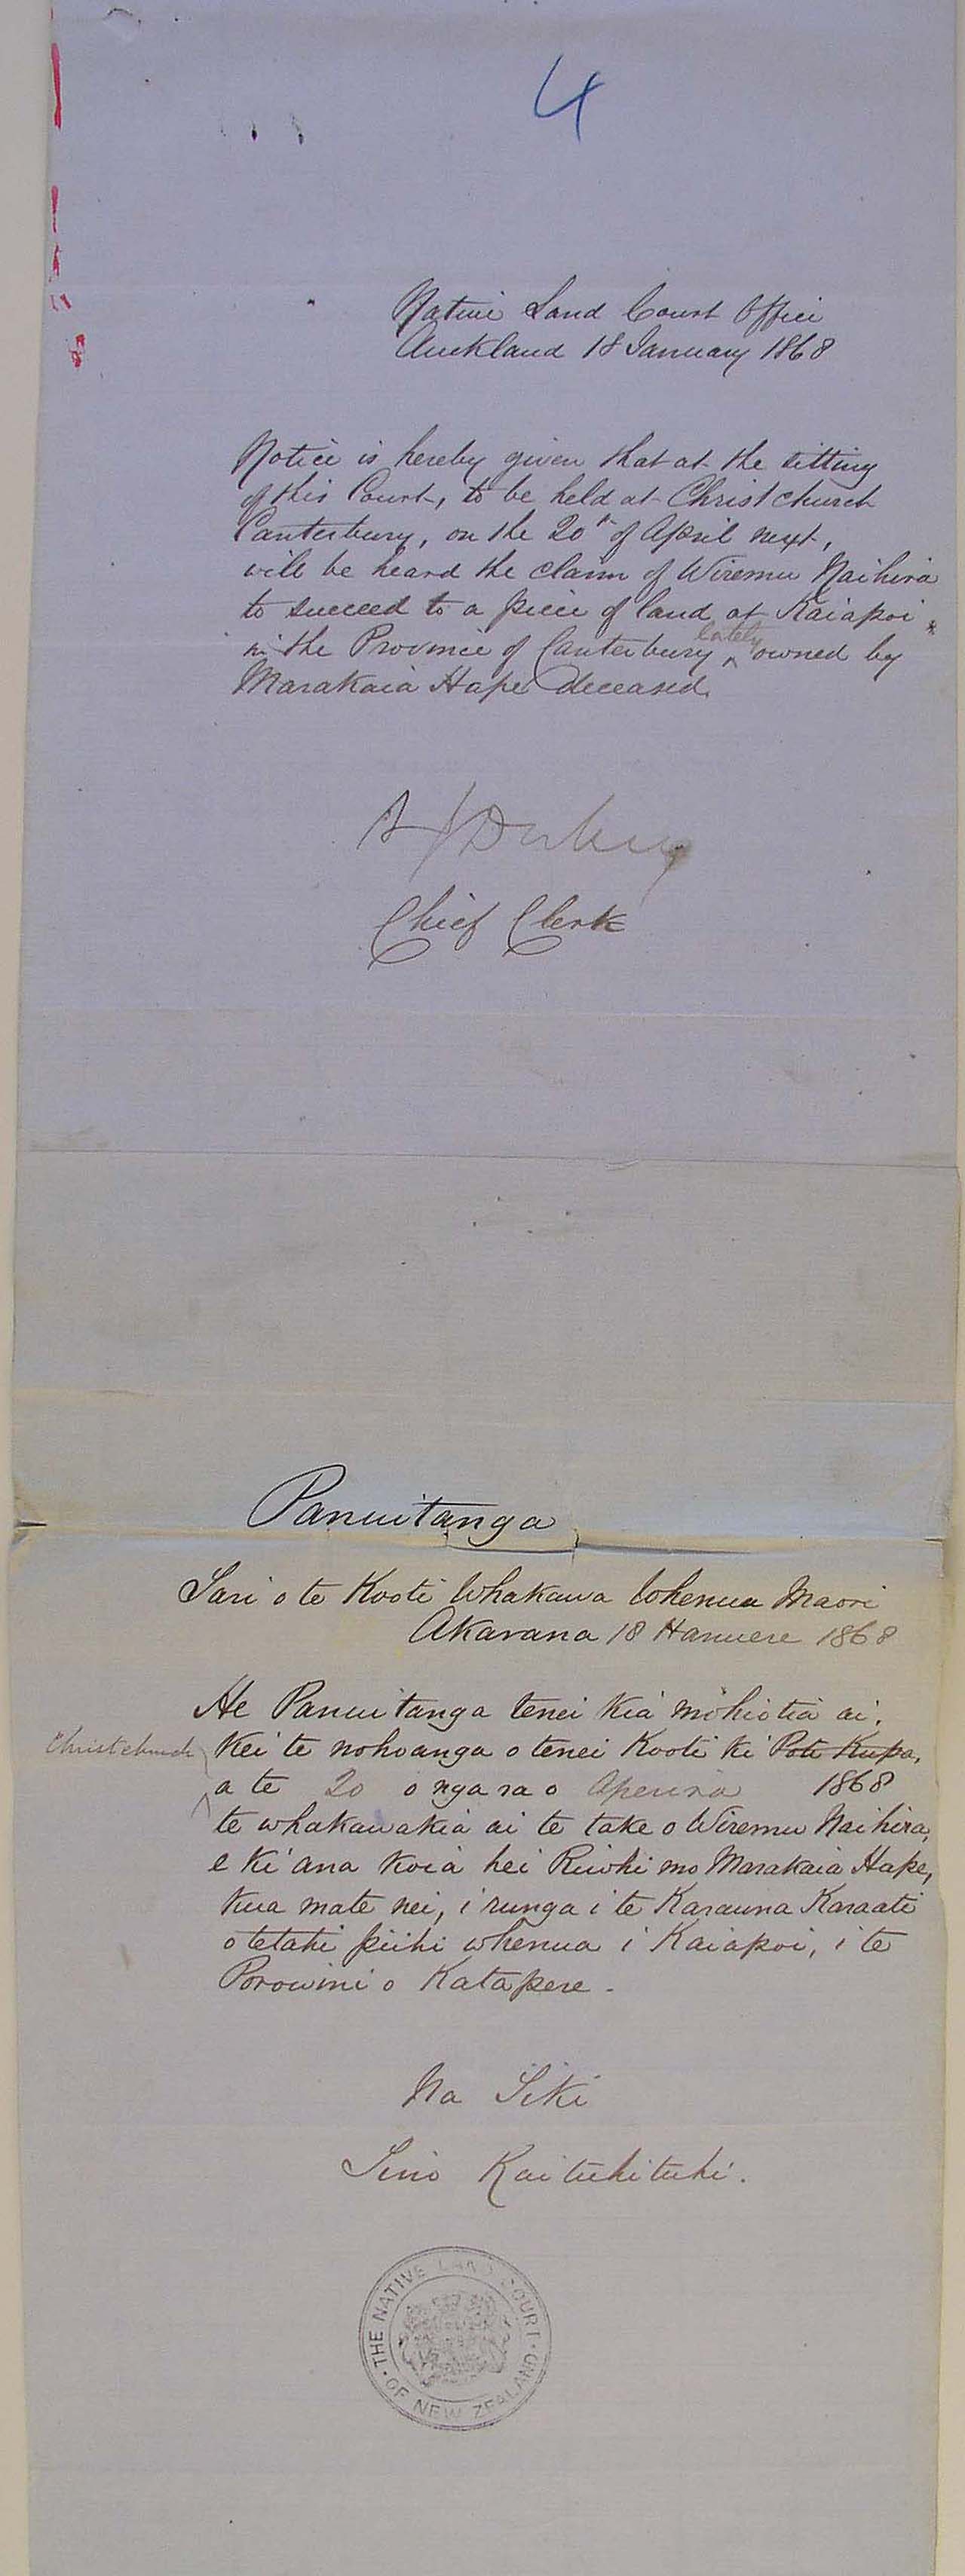 Land claim by Wi Naehira - 1868 - Whole